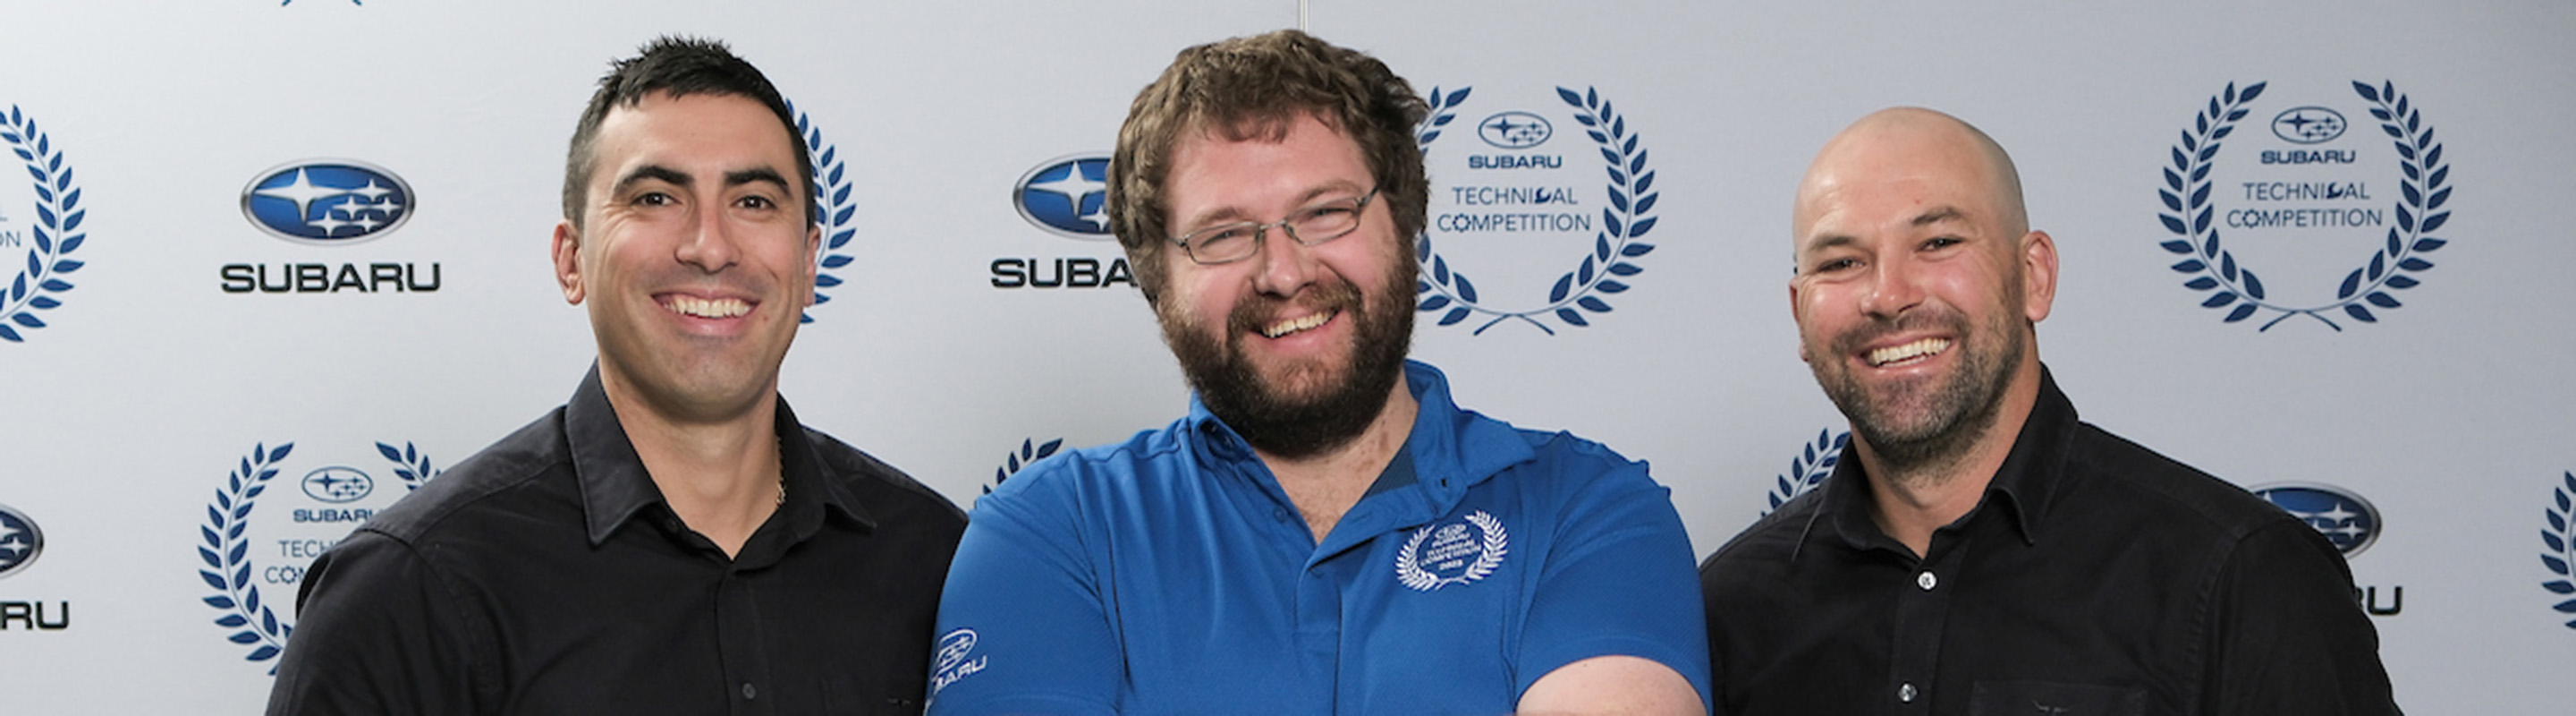 Richard Fergusson of Eblen Subaru triumphs as winner of 2023 Subaru World Technician Competition